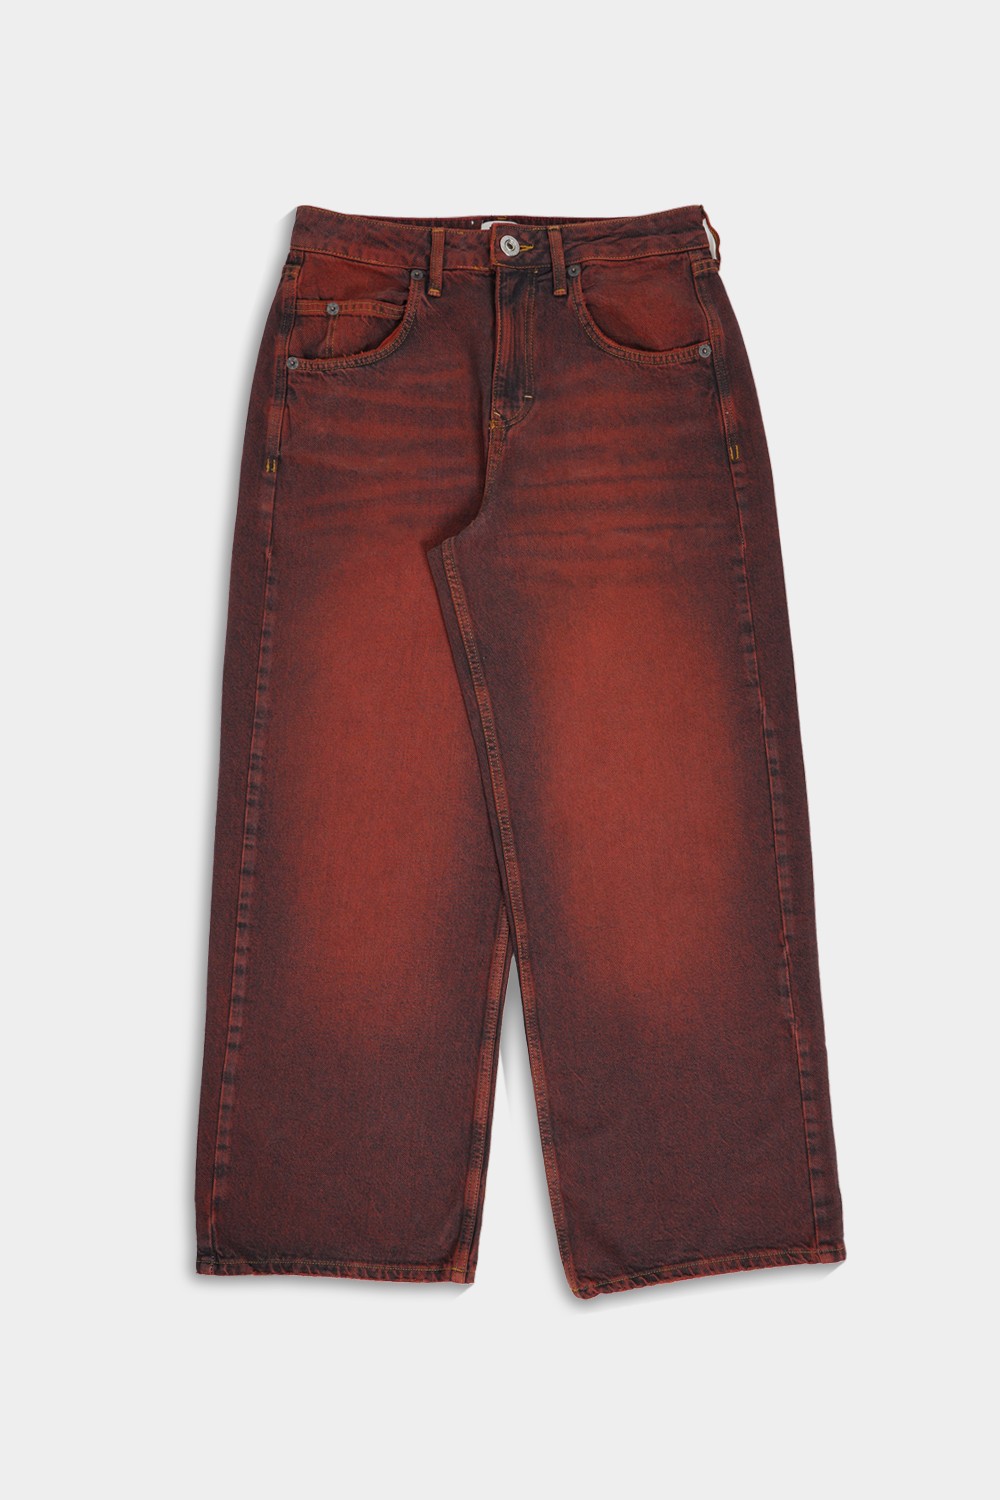 Red Tint Jaya Baggy Jeans (URBN-B-235)